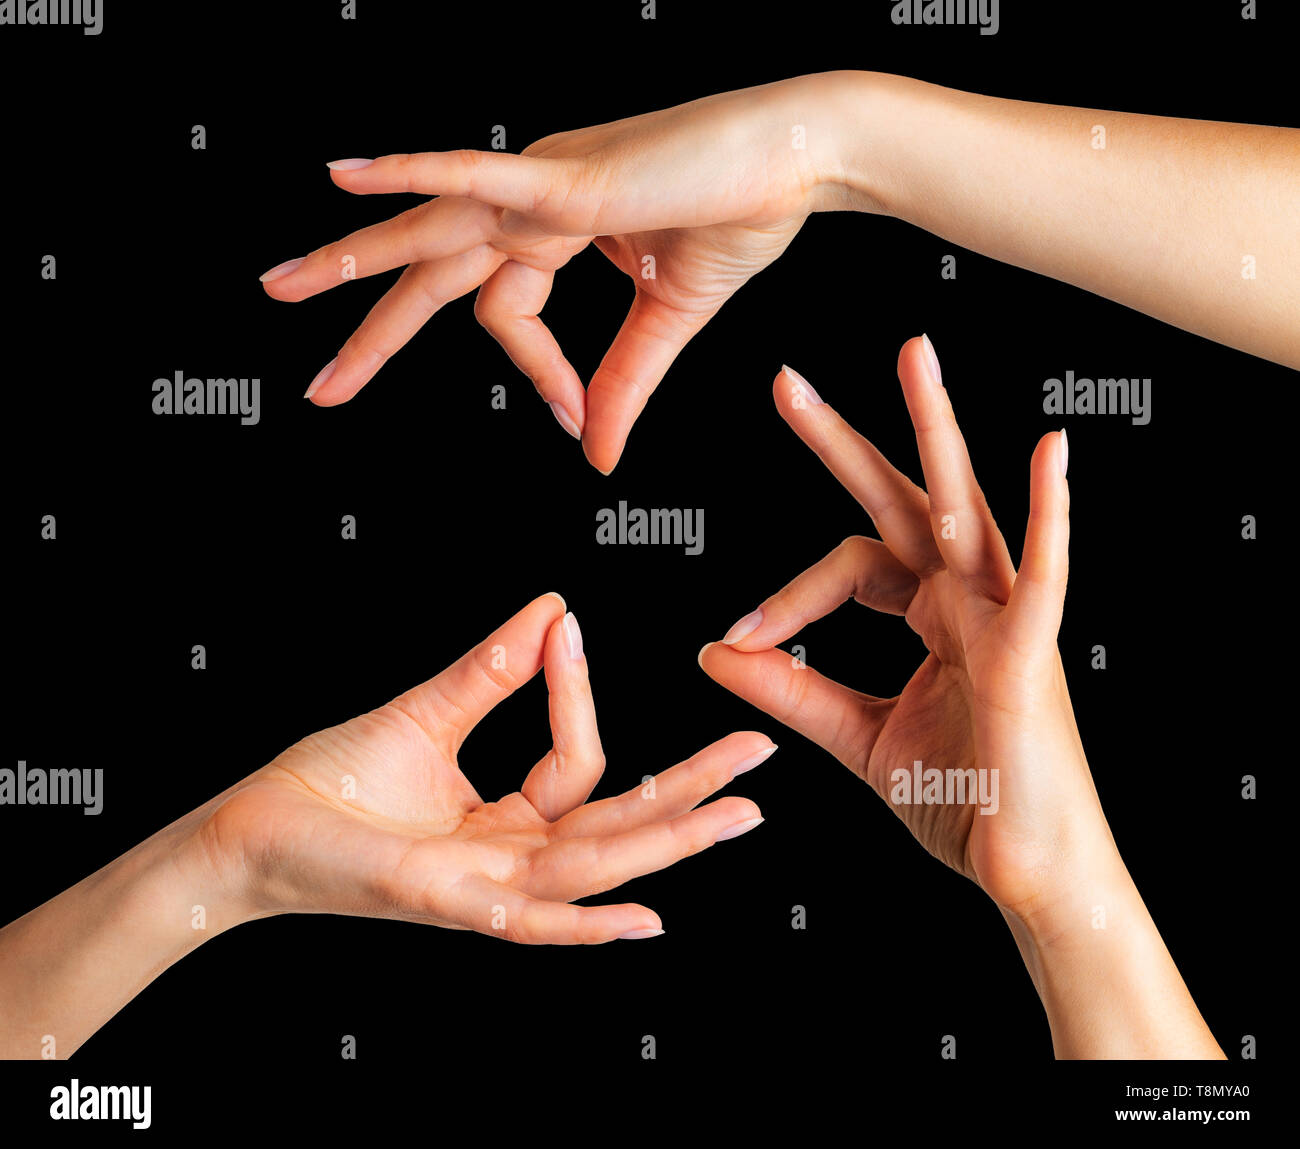 Hands gesture, hand poses, Human hand gestures. Hand gesture communication  14546055 Stock Photo at Vecteezy